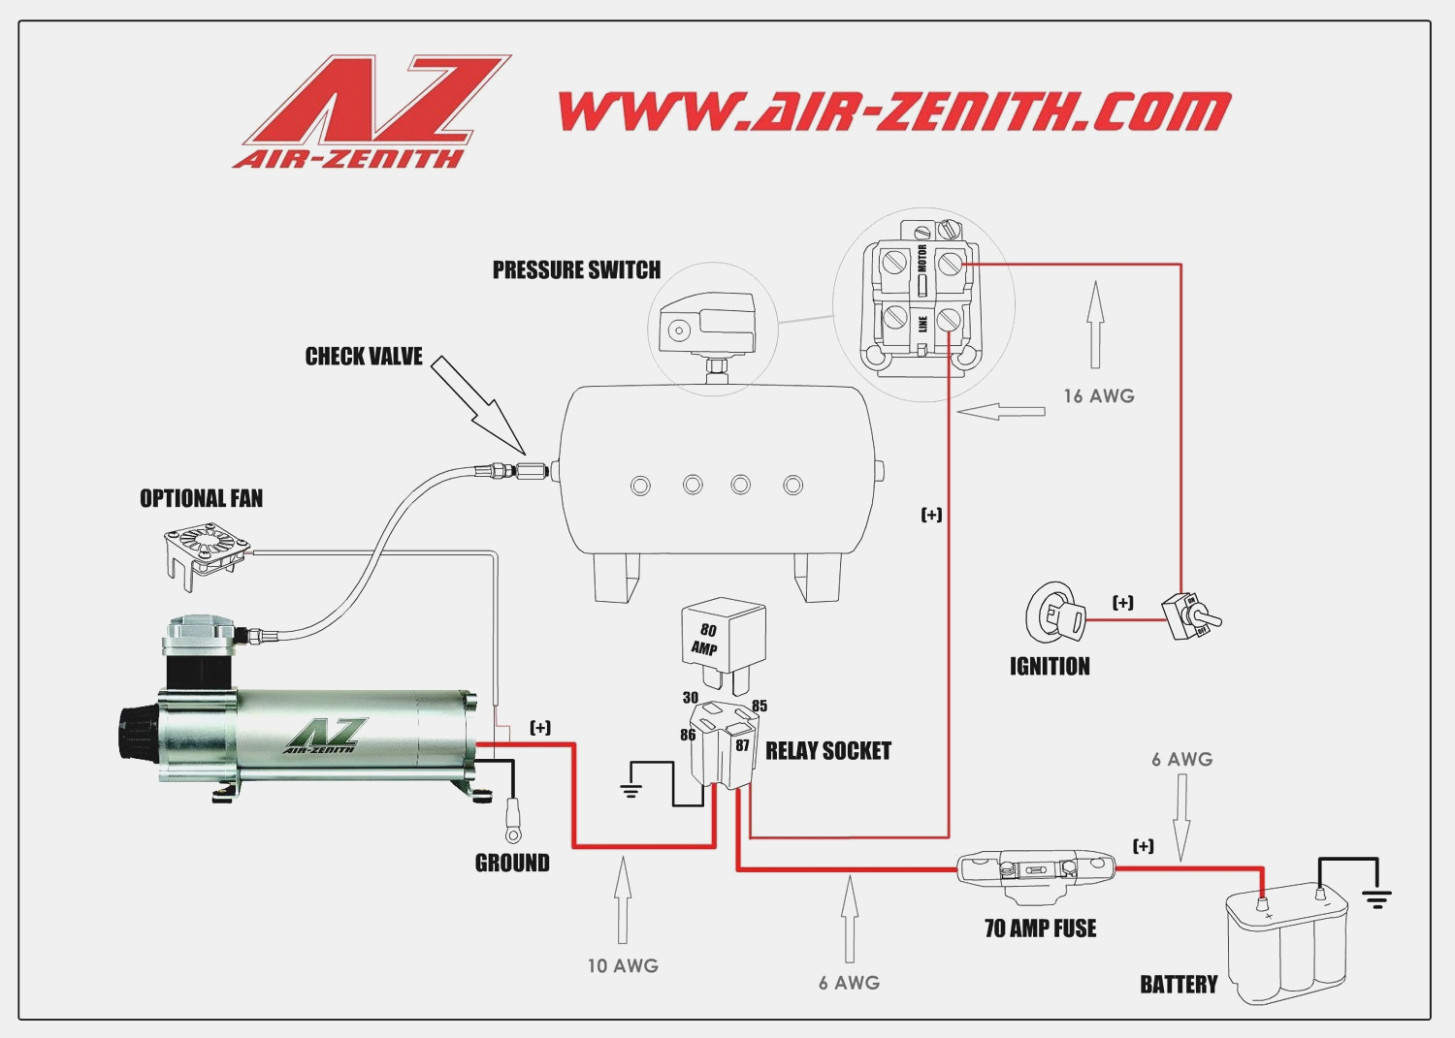 230V 1 Phase Wiring Diagram | Manual E-Books - Air Compressor Wiring Diagram 230V 1 Phase